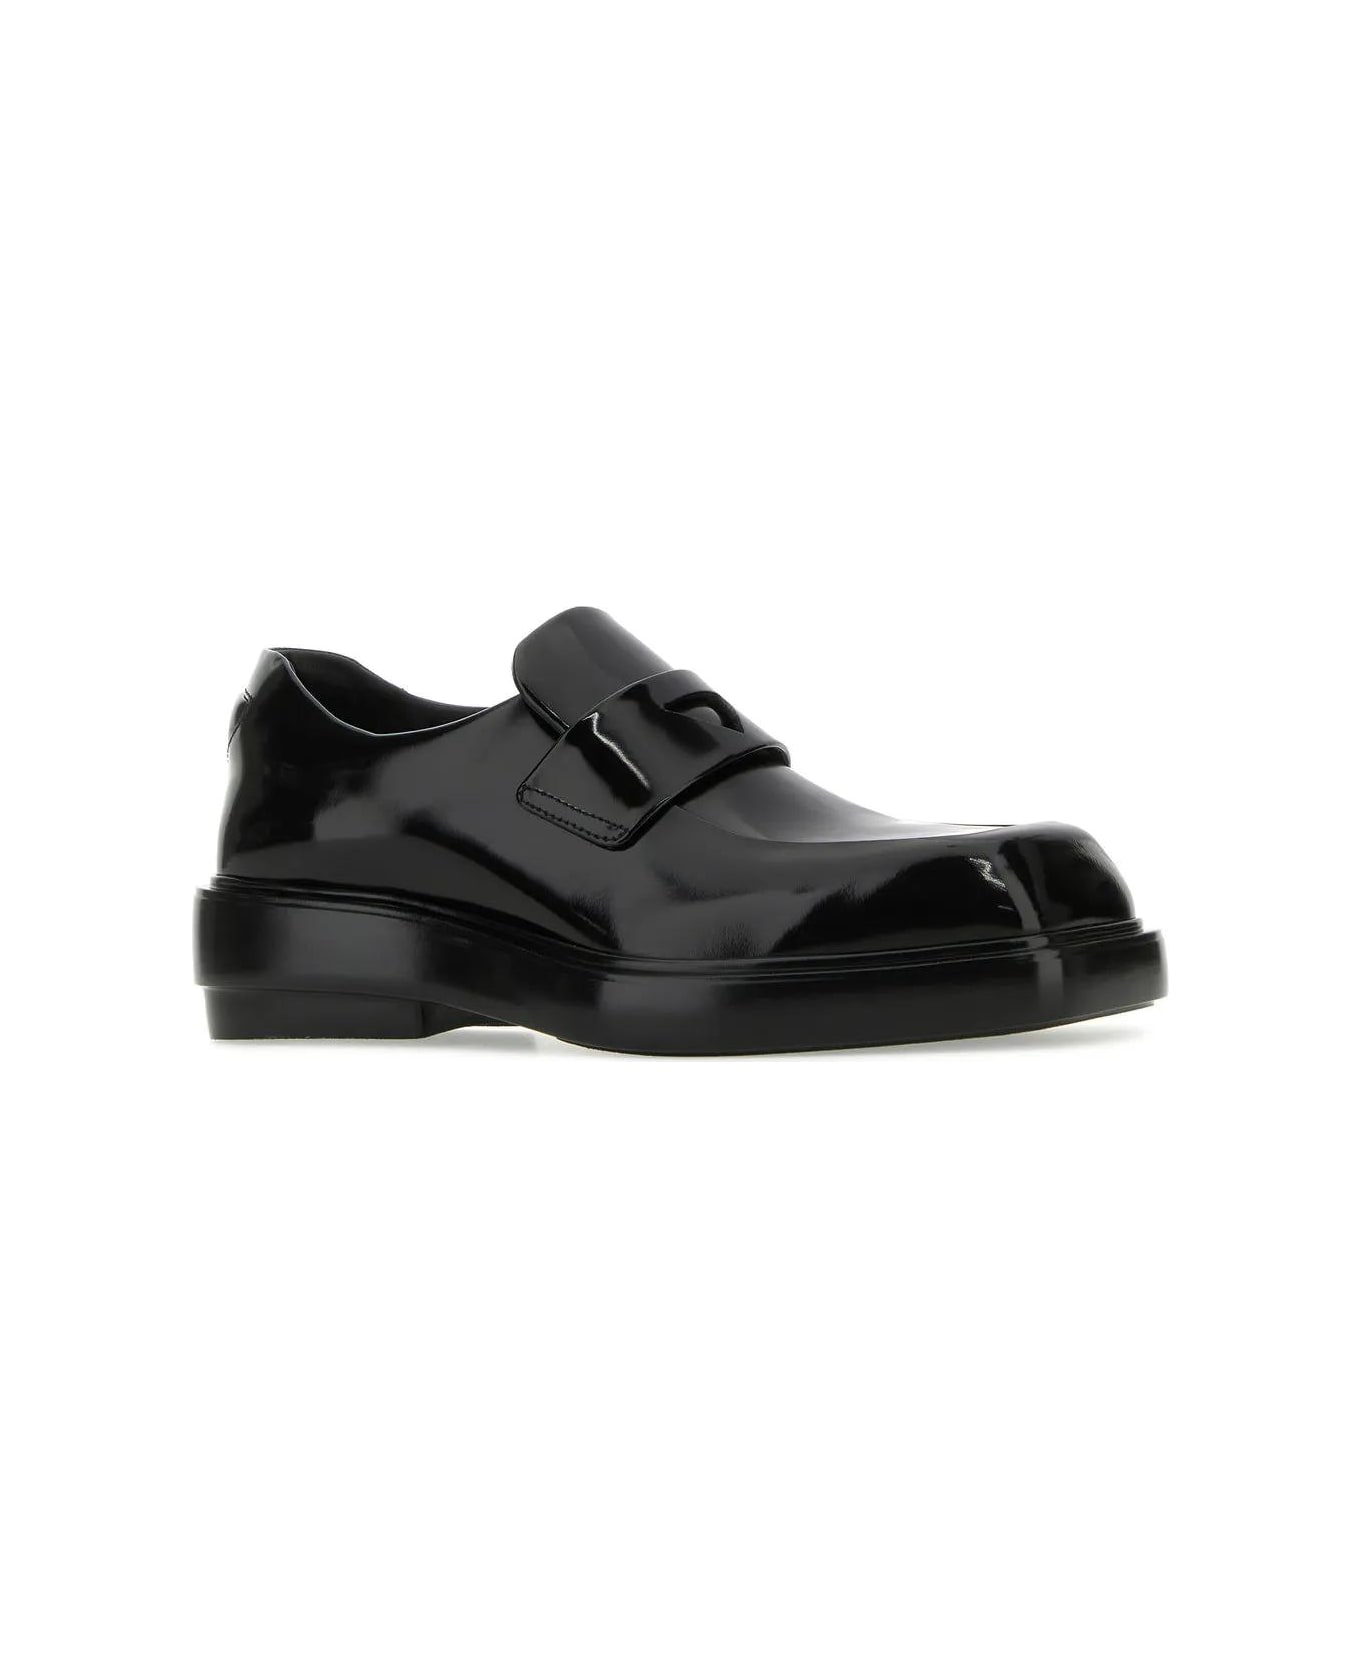 Prada Black Leather Loafers - Black